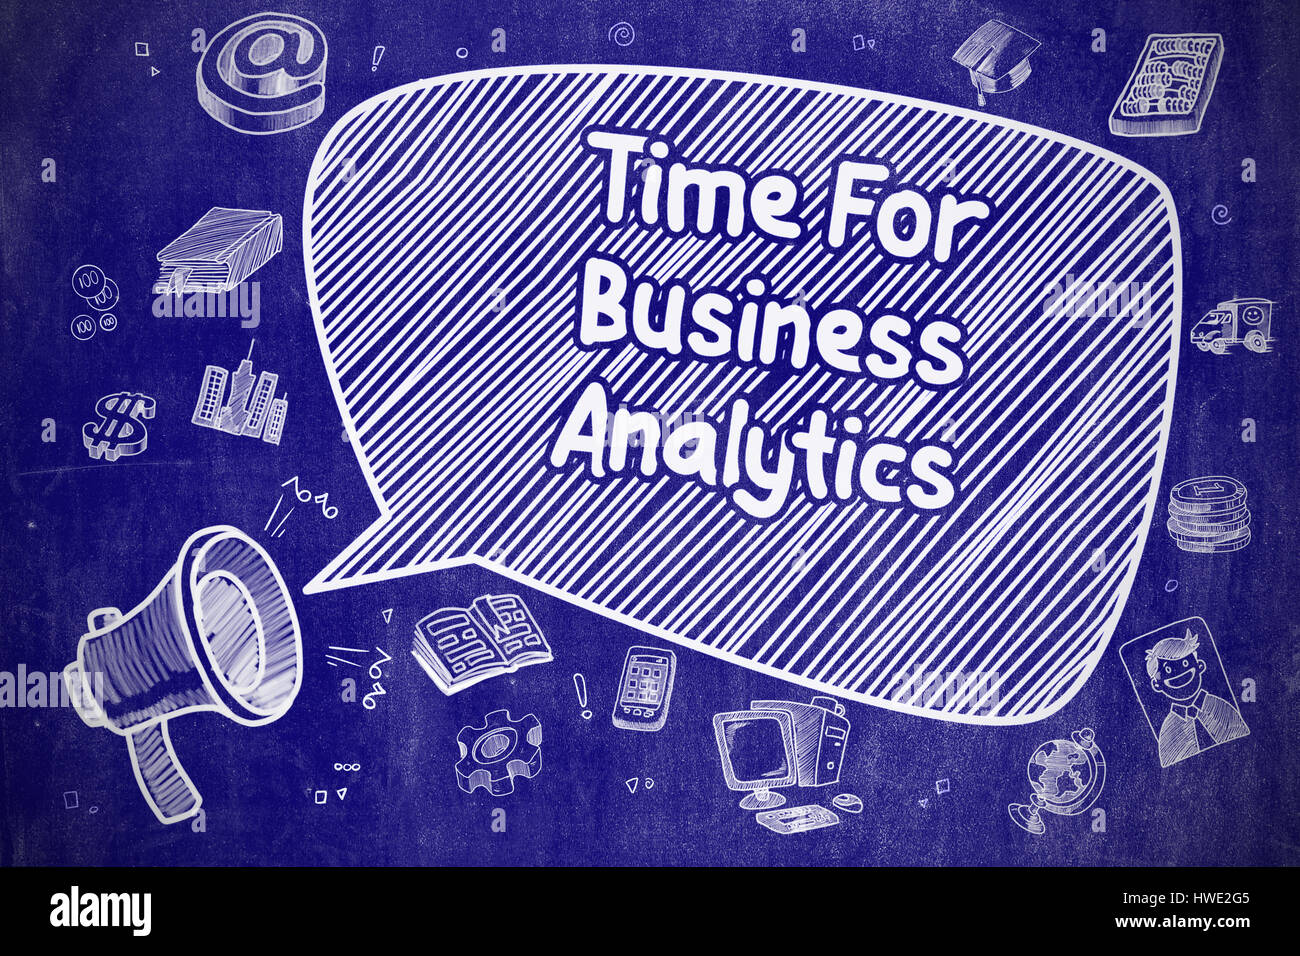 Time for Business Analytics - Concept d'affaires. Banque D'Images